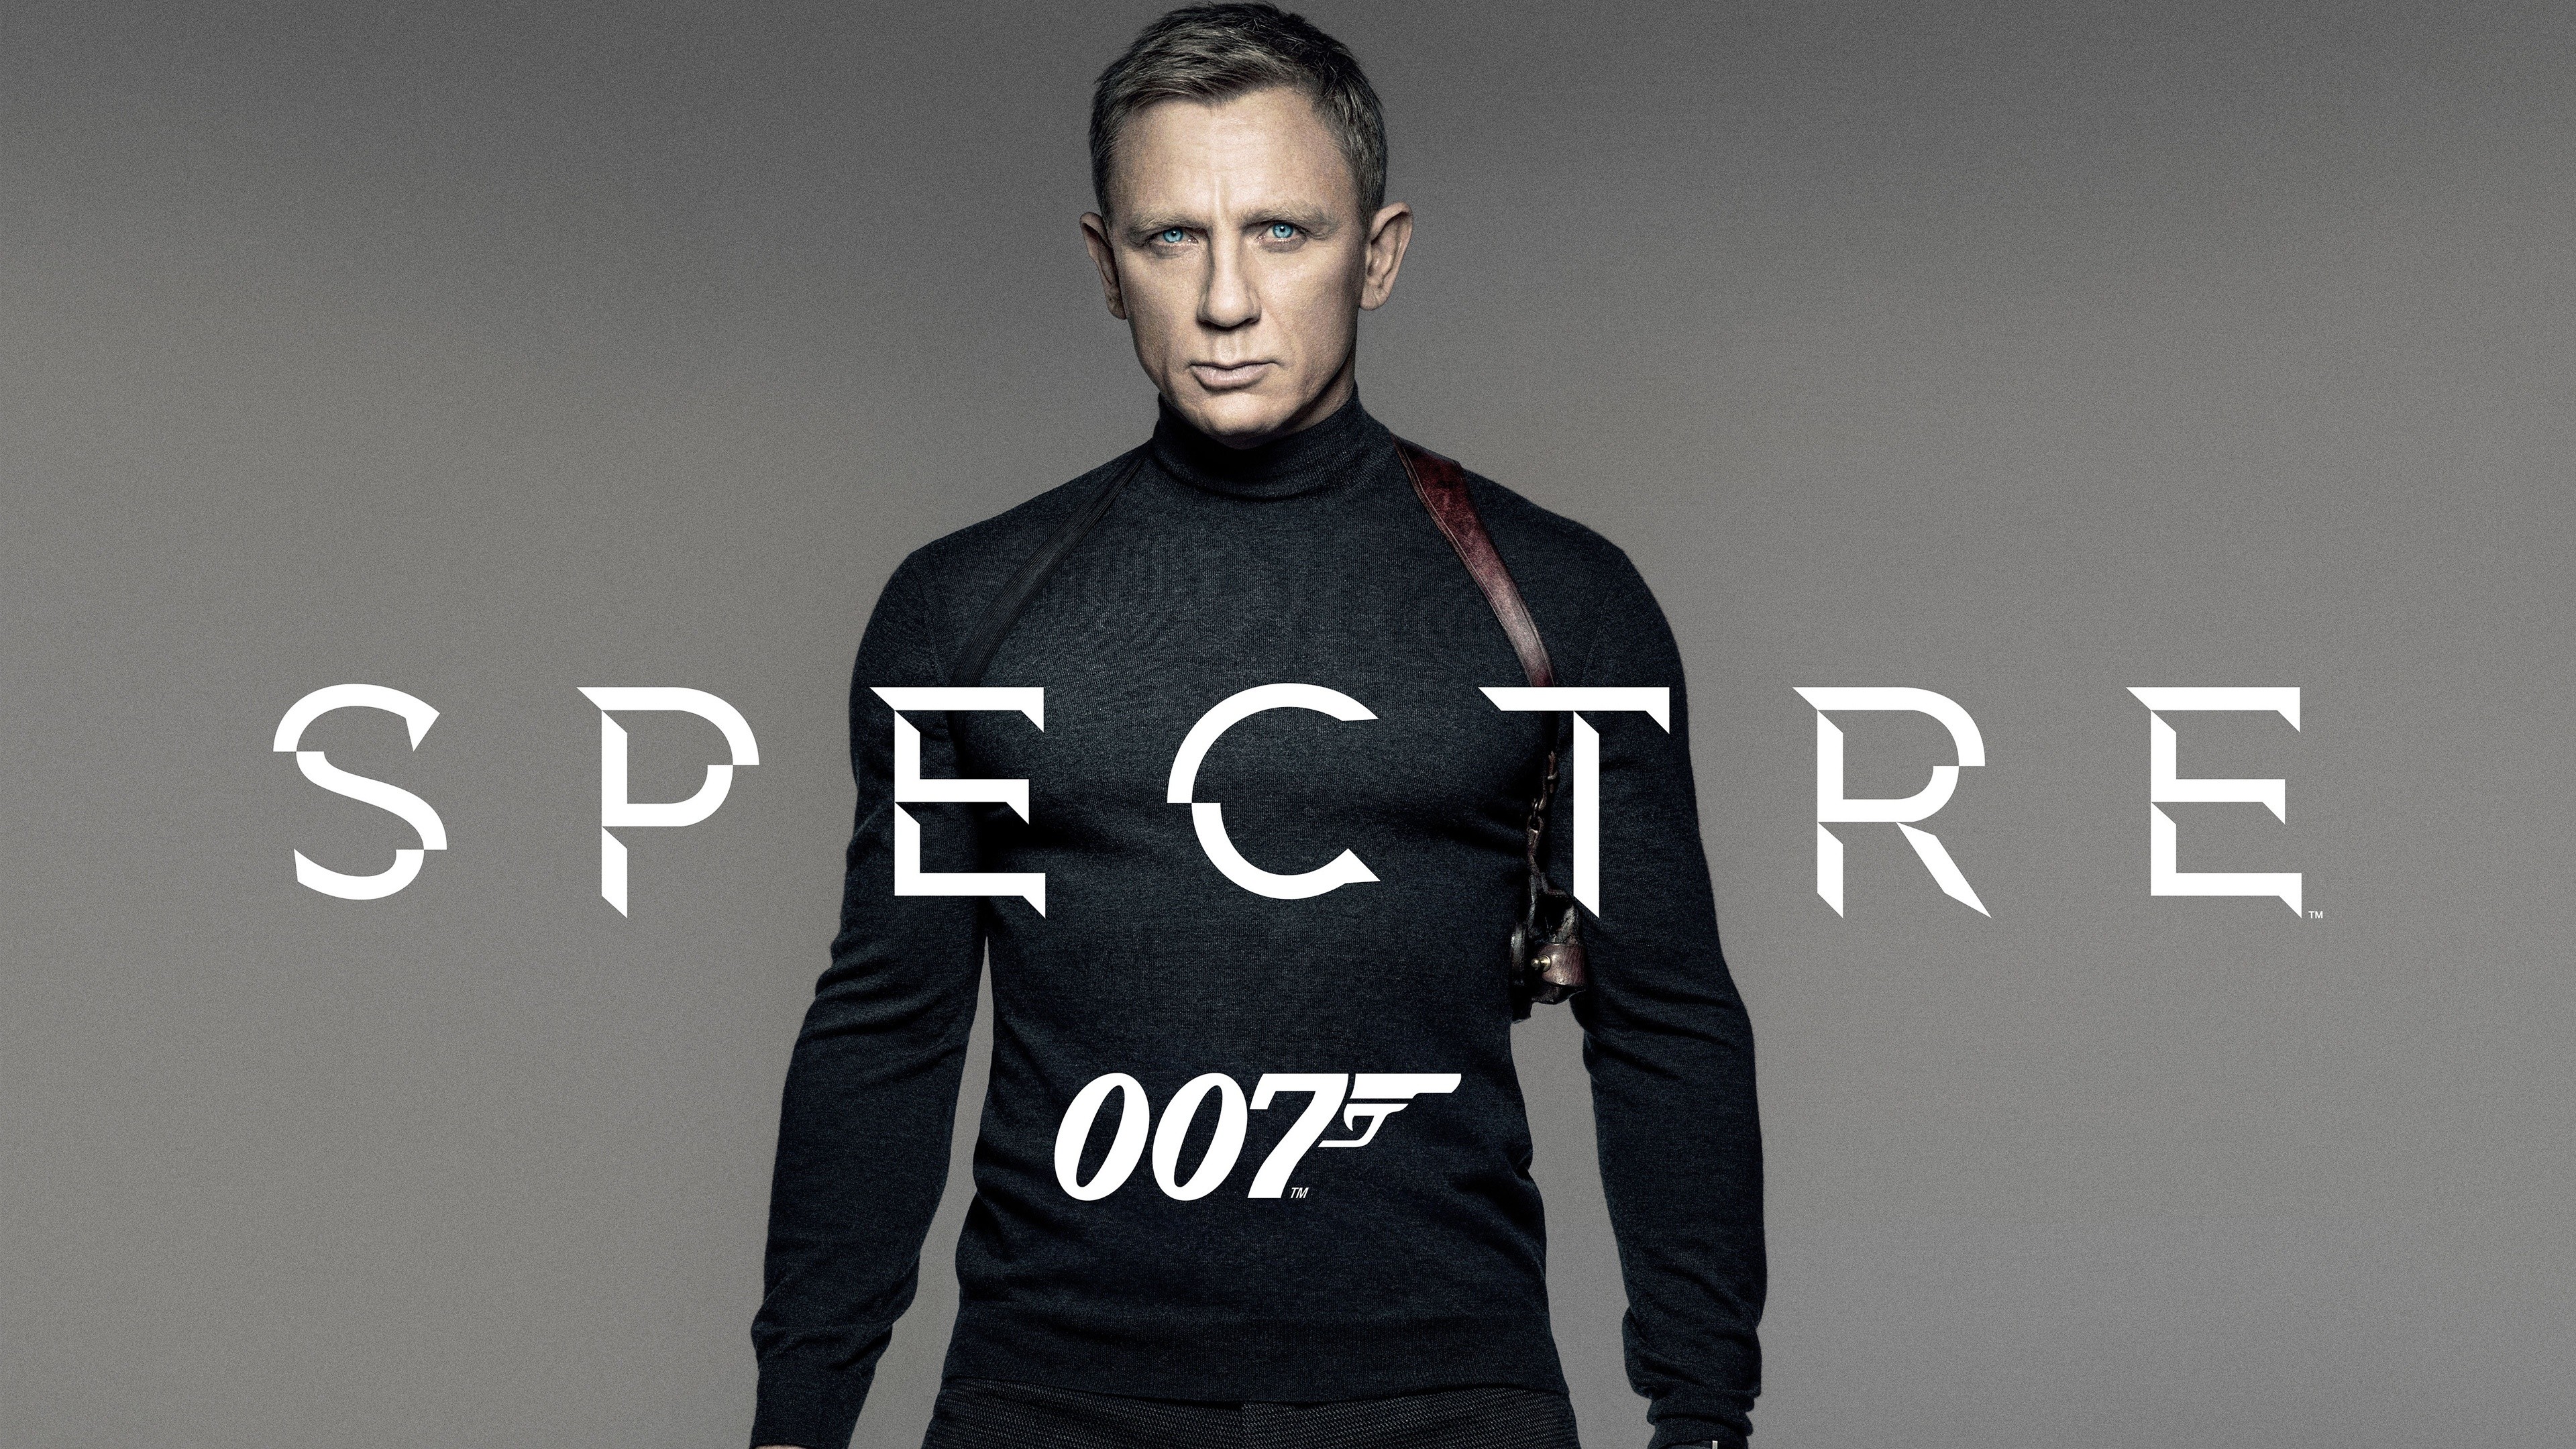 Movie Poster Of Spectre 007 James Bond Daniel Craig For